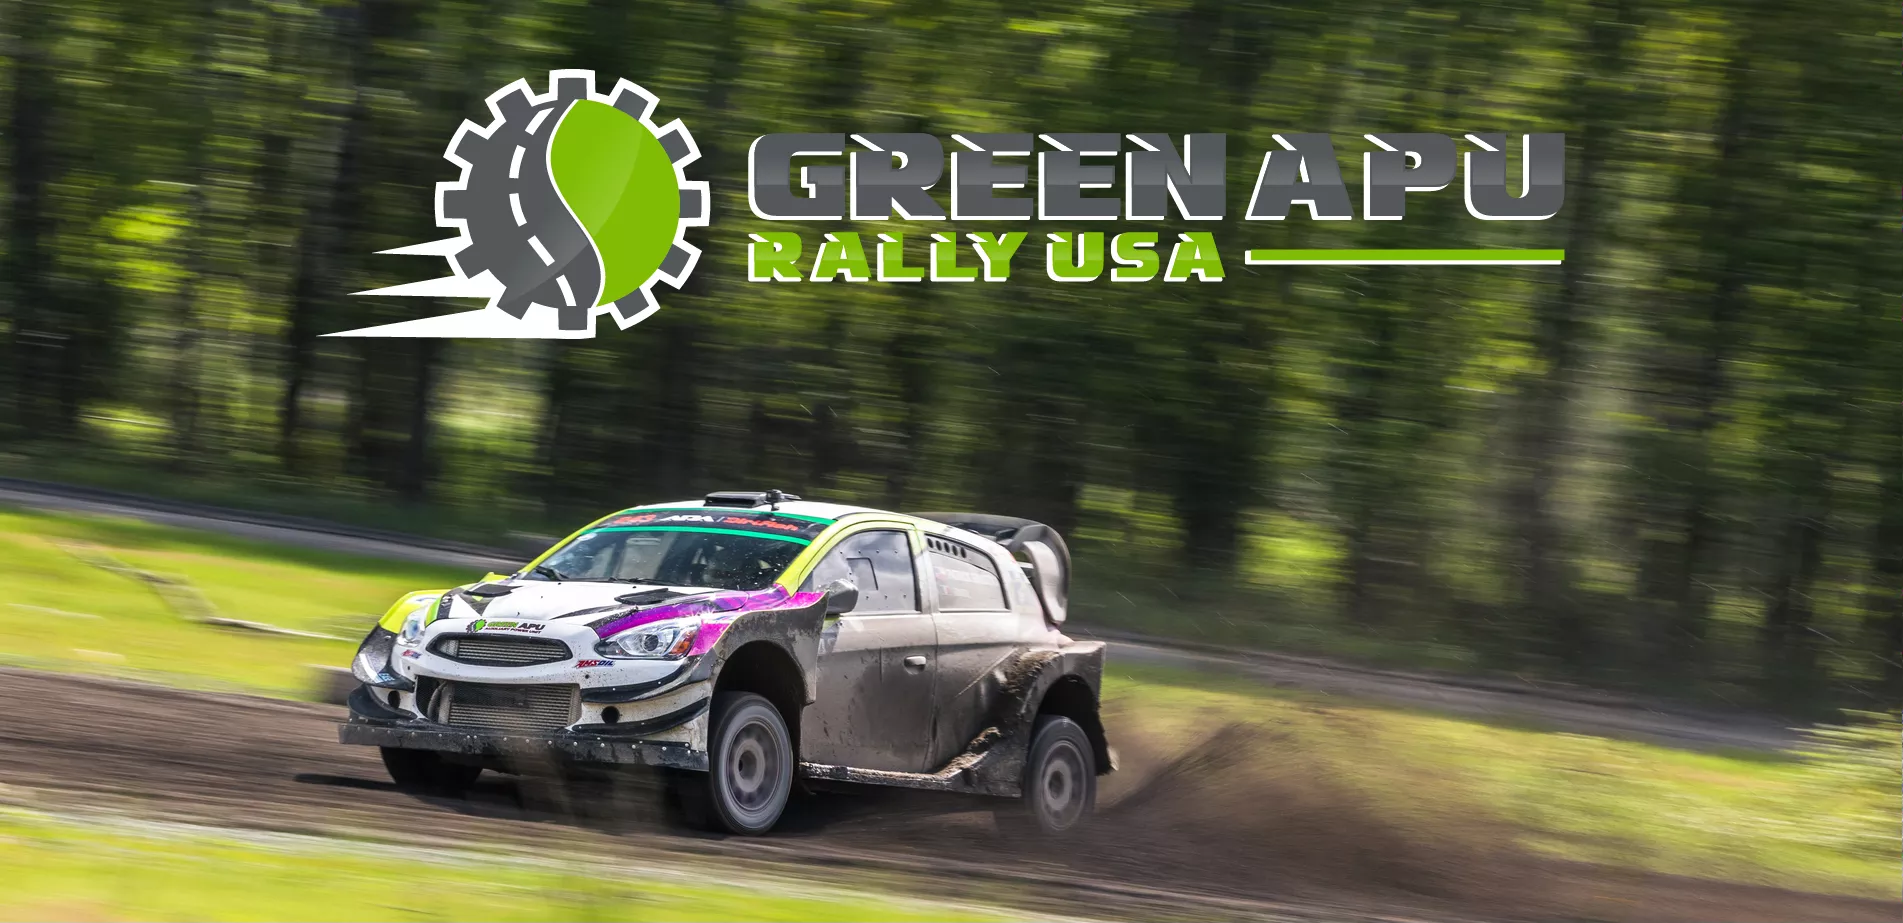 Green APU Rally Racing Car drifting through dirt corner